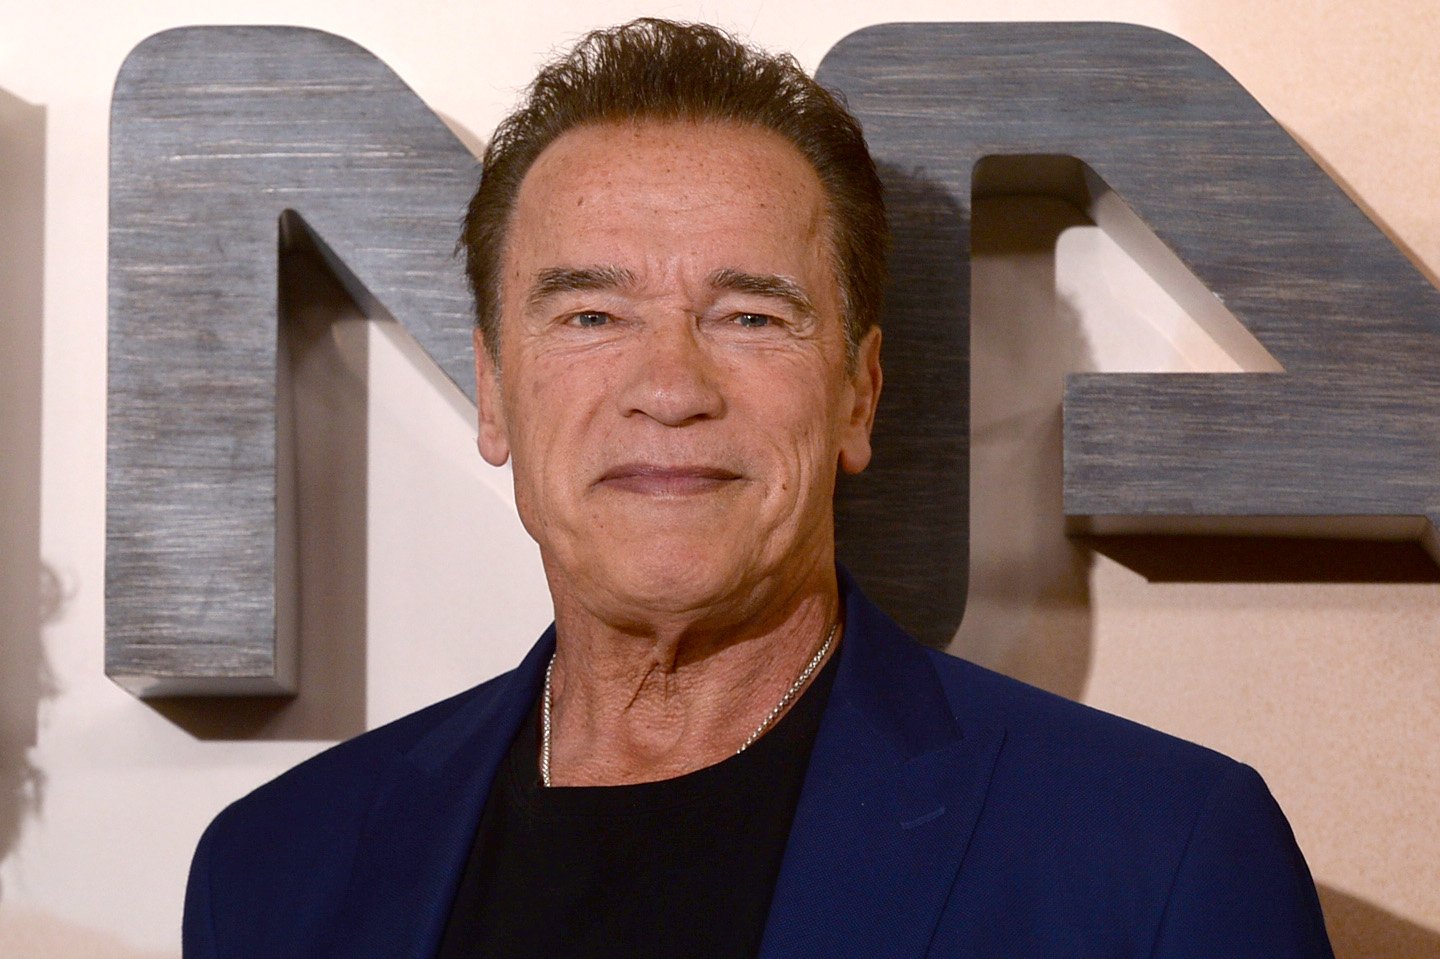 Arnold Schwarzenegger am 17. Oktober 2019 in London, England | Quelle: Getty Images